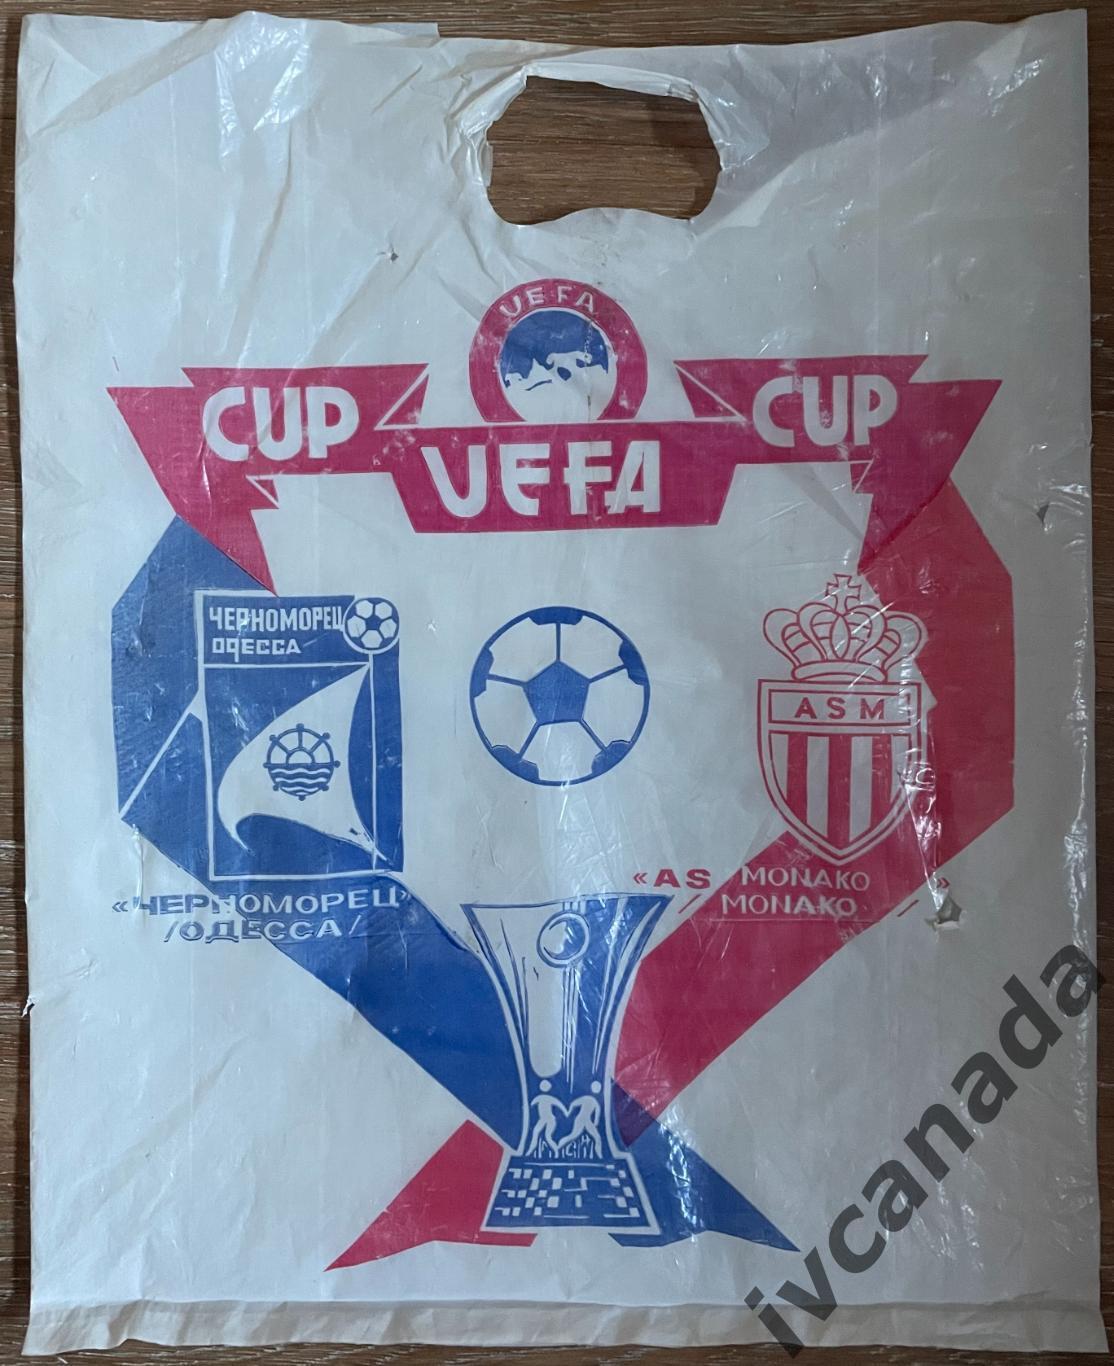 Черноморец Одесса - Монако. 24 октября 1990 года. Кубок УЕФА, п/э пакет, б/у.